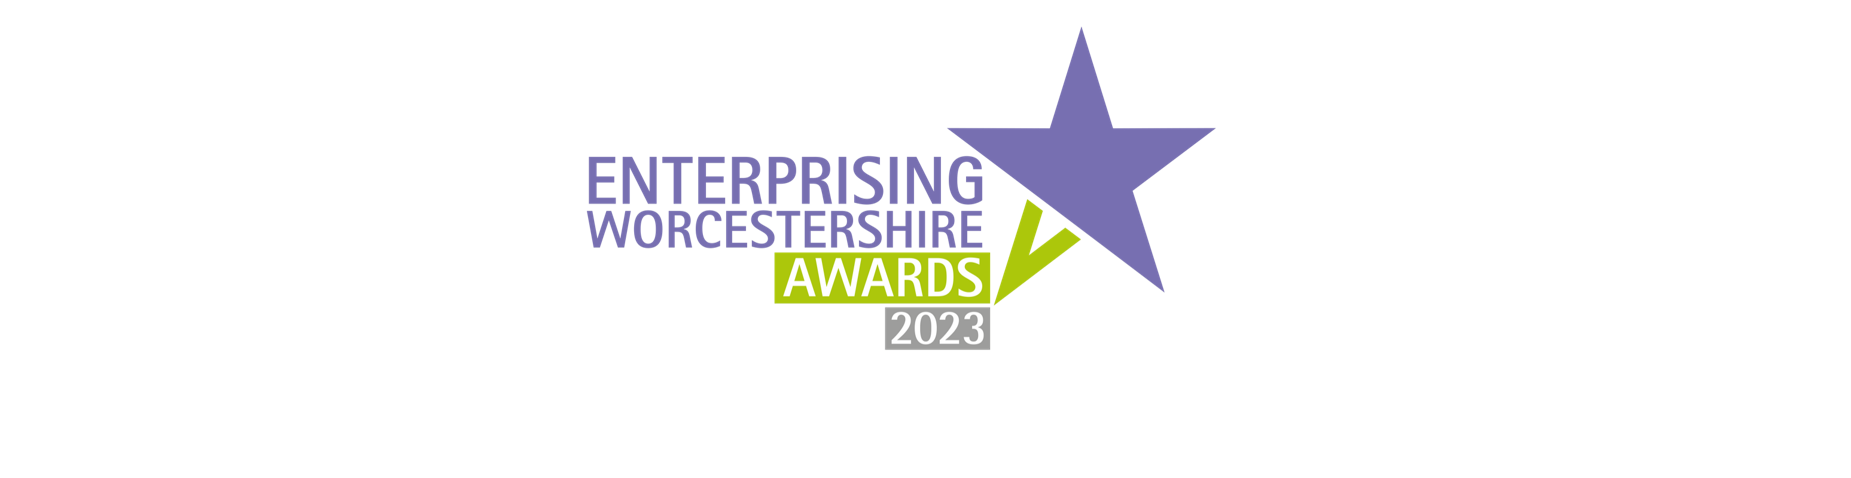 Enterprising Worcestershire Award Nominations 2023